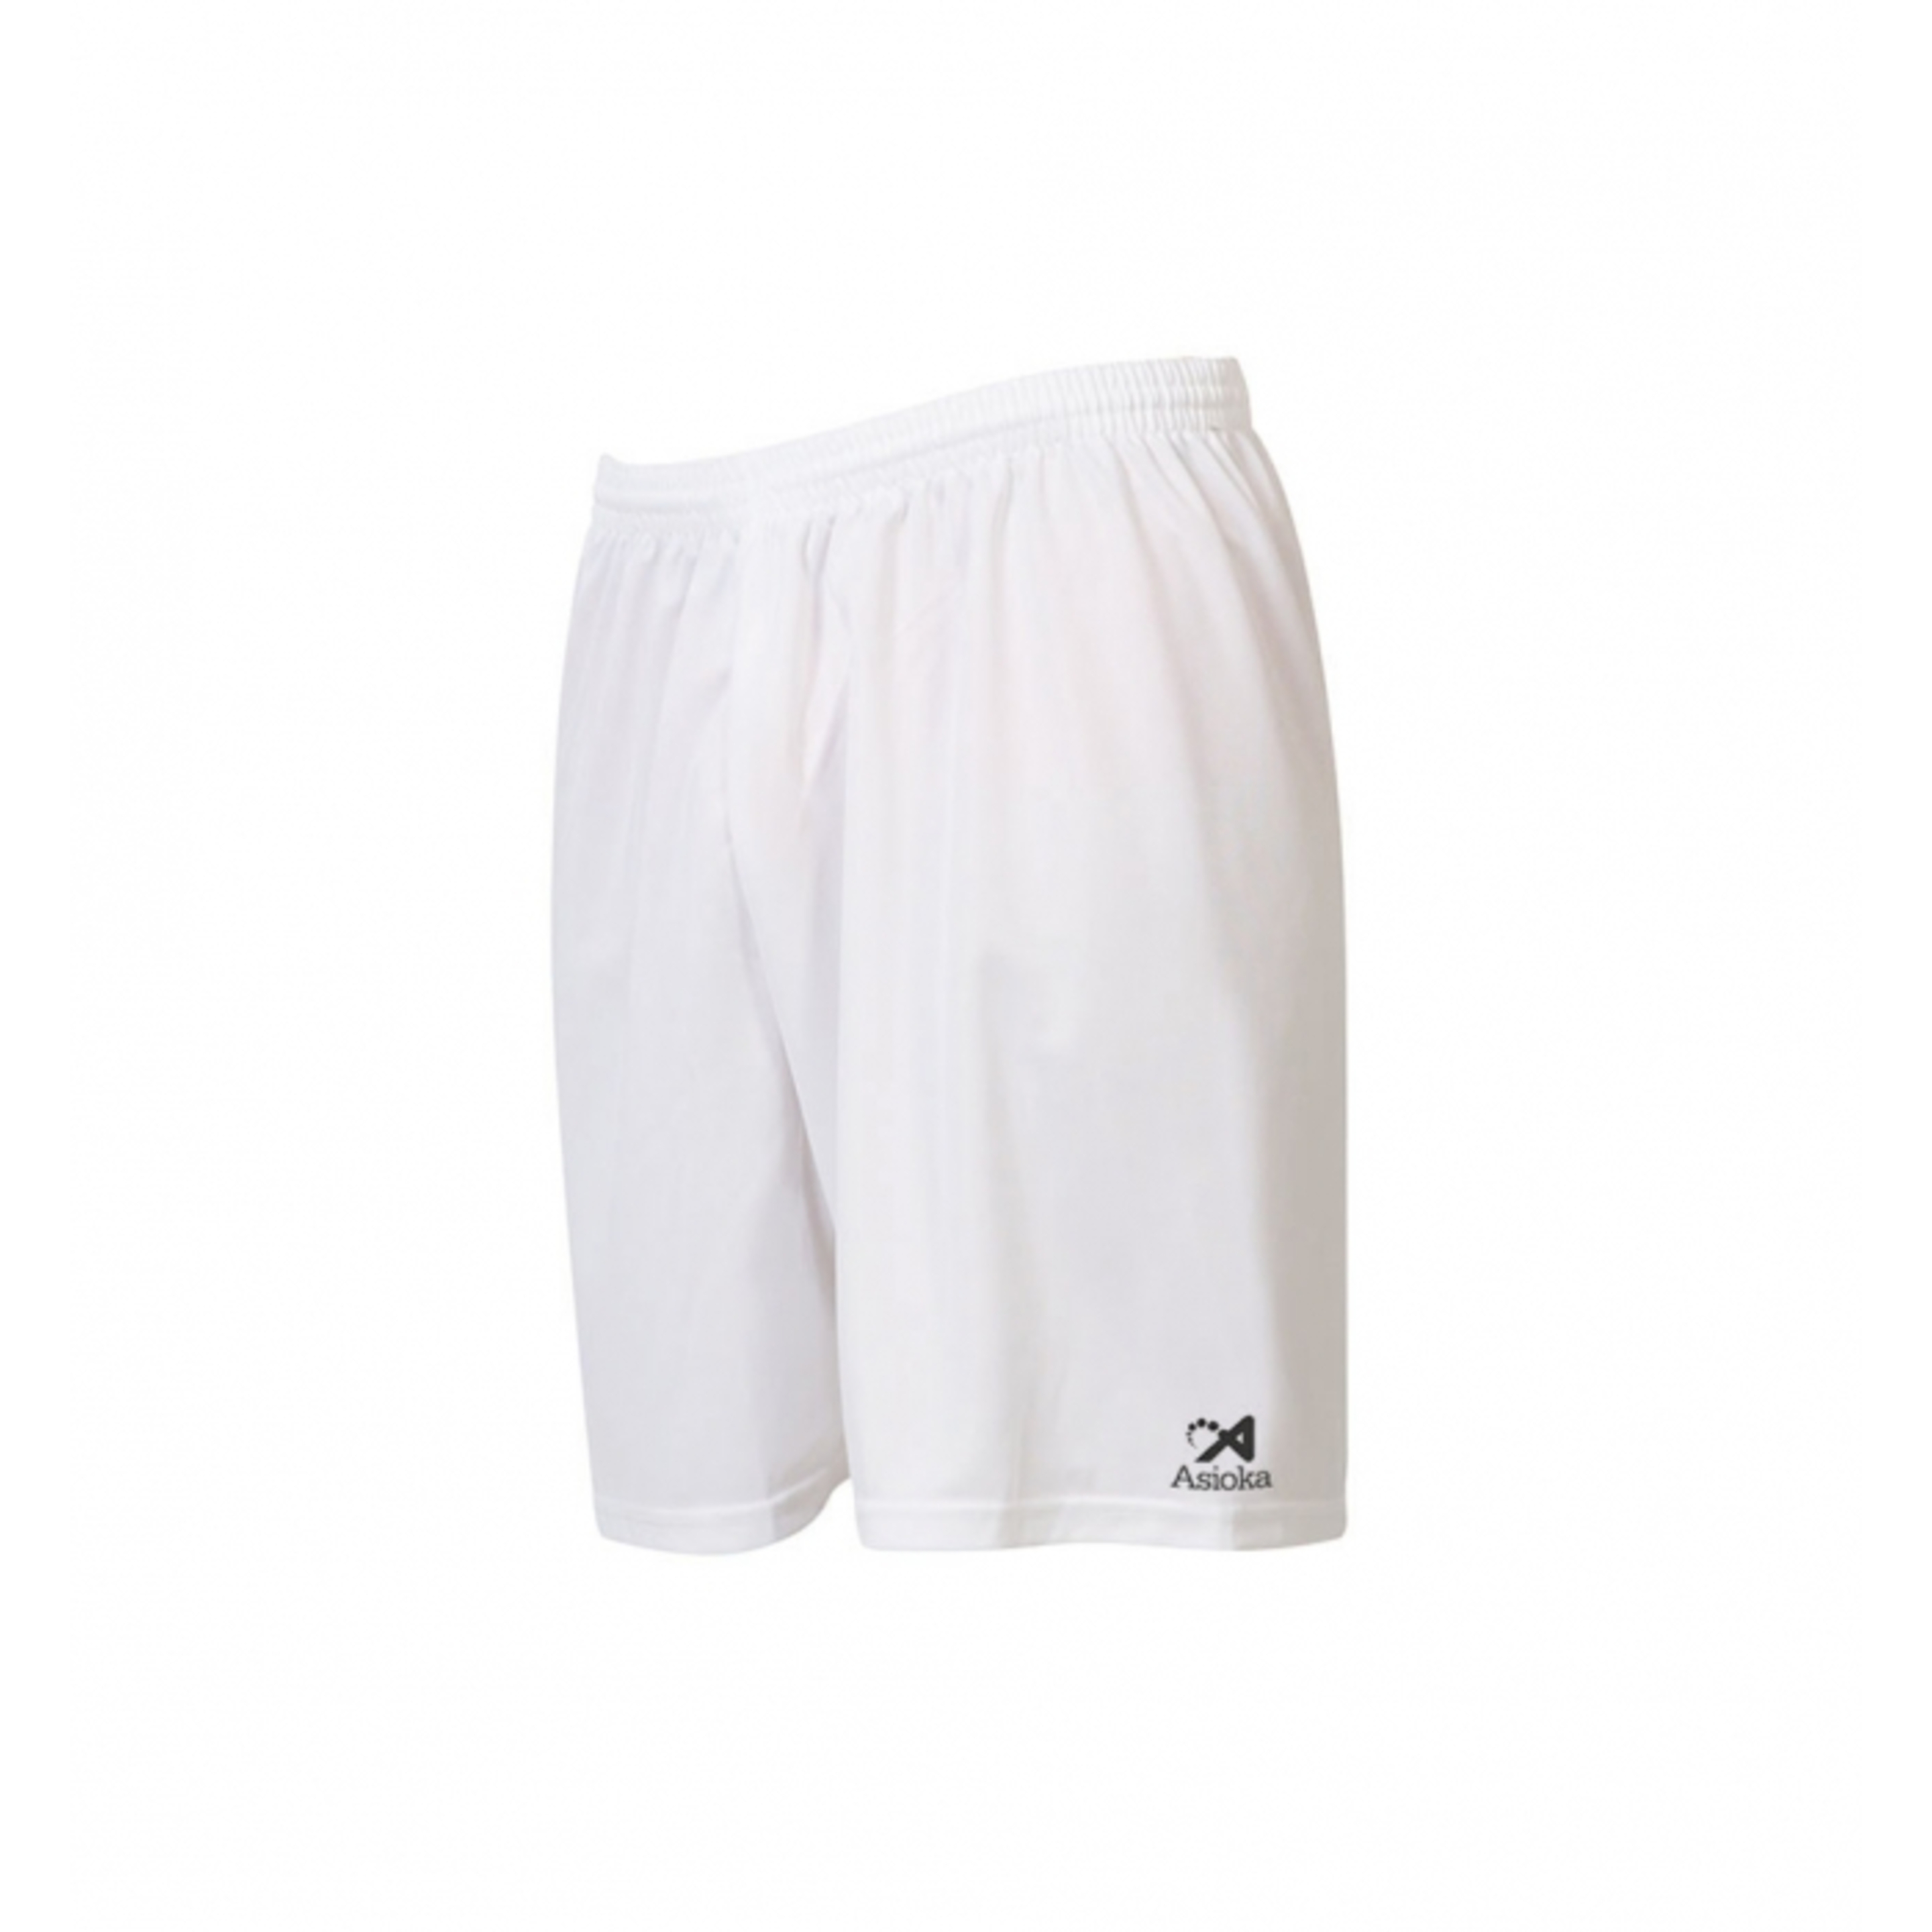 Pantalón Corto Asioka Premium - blanco - 